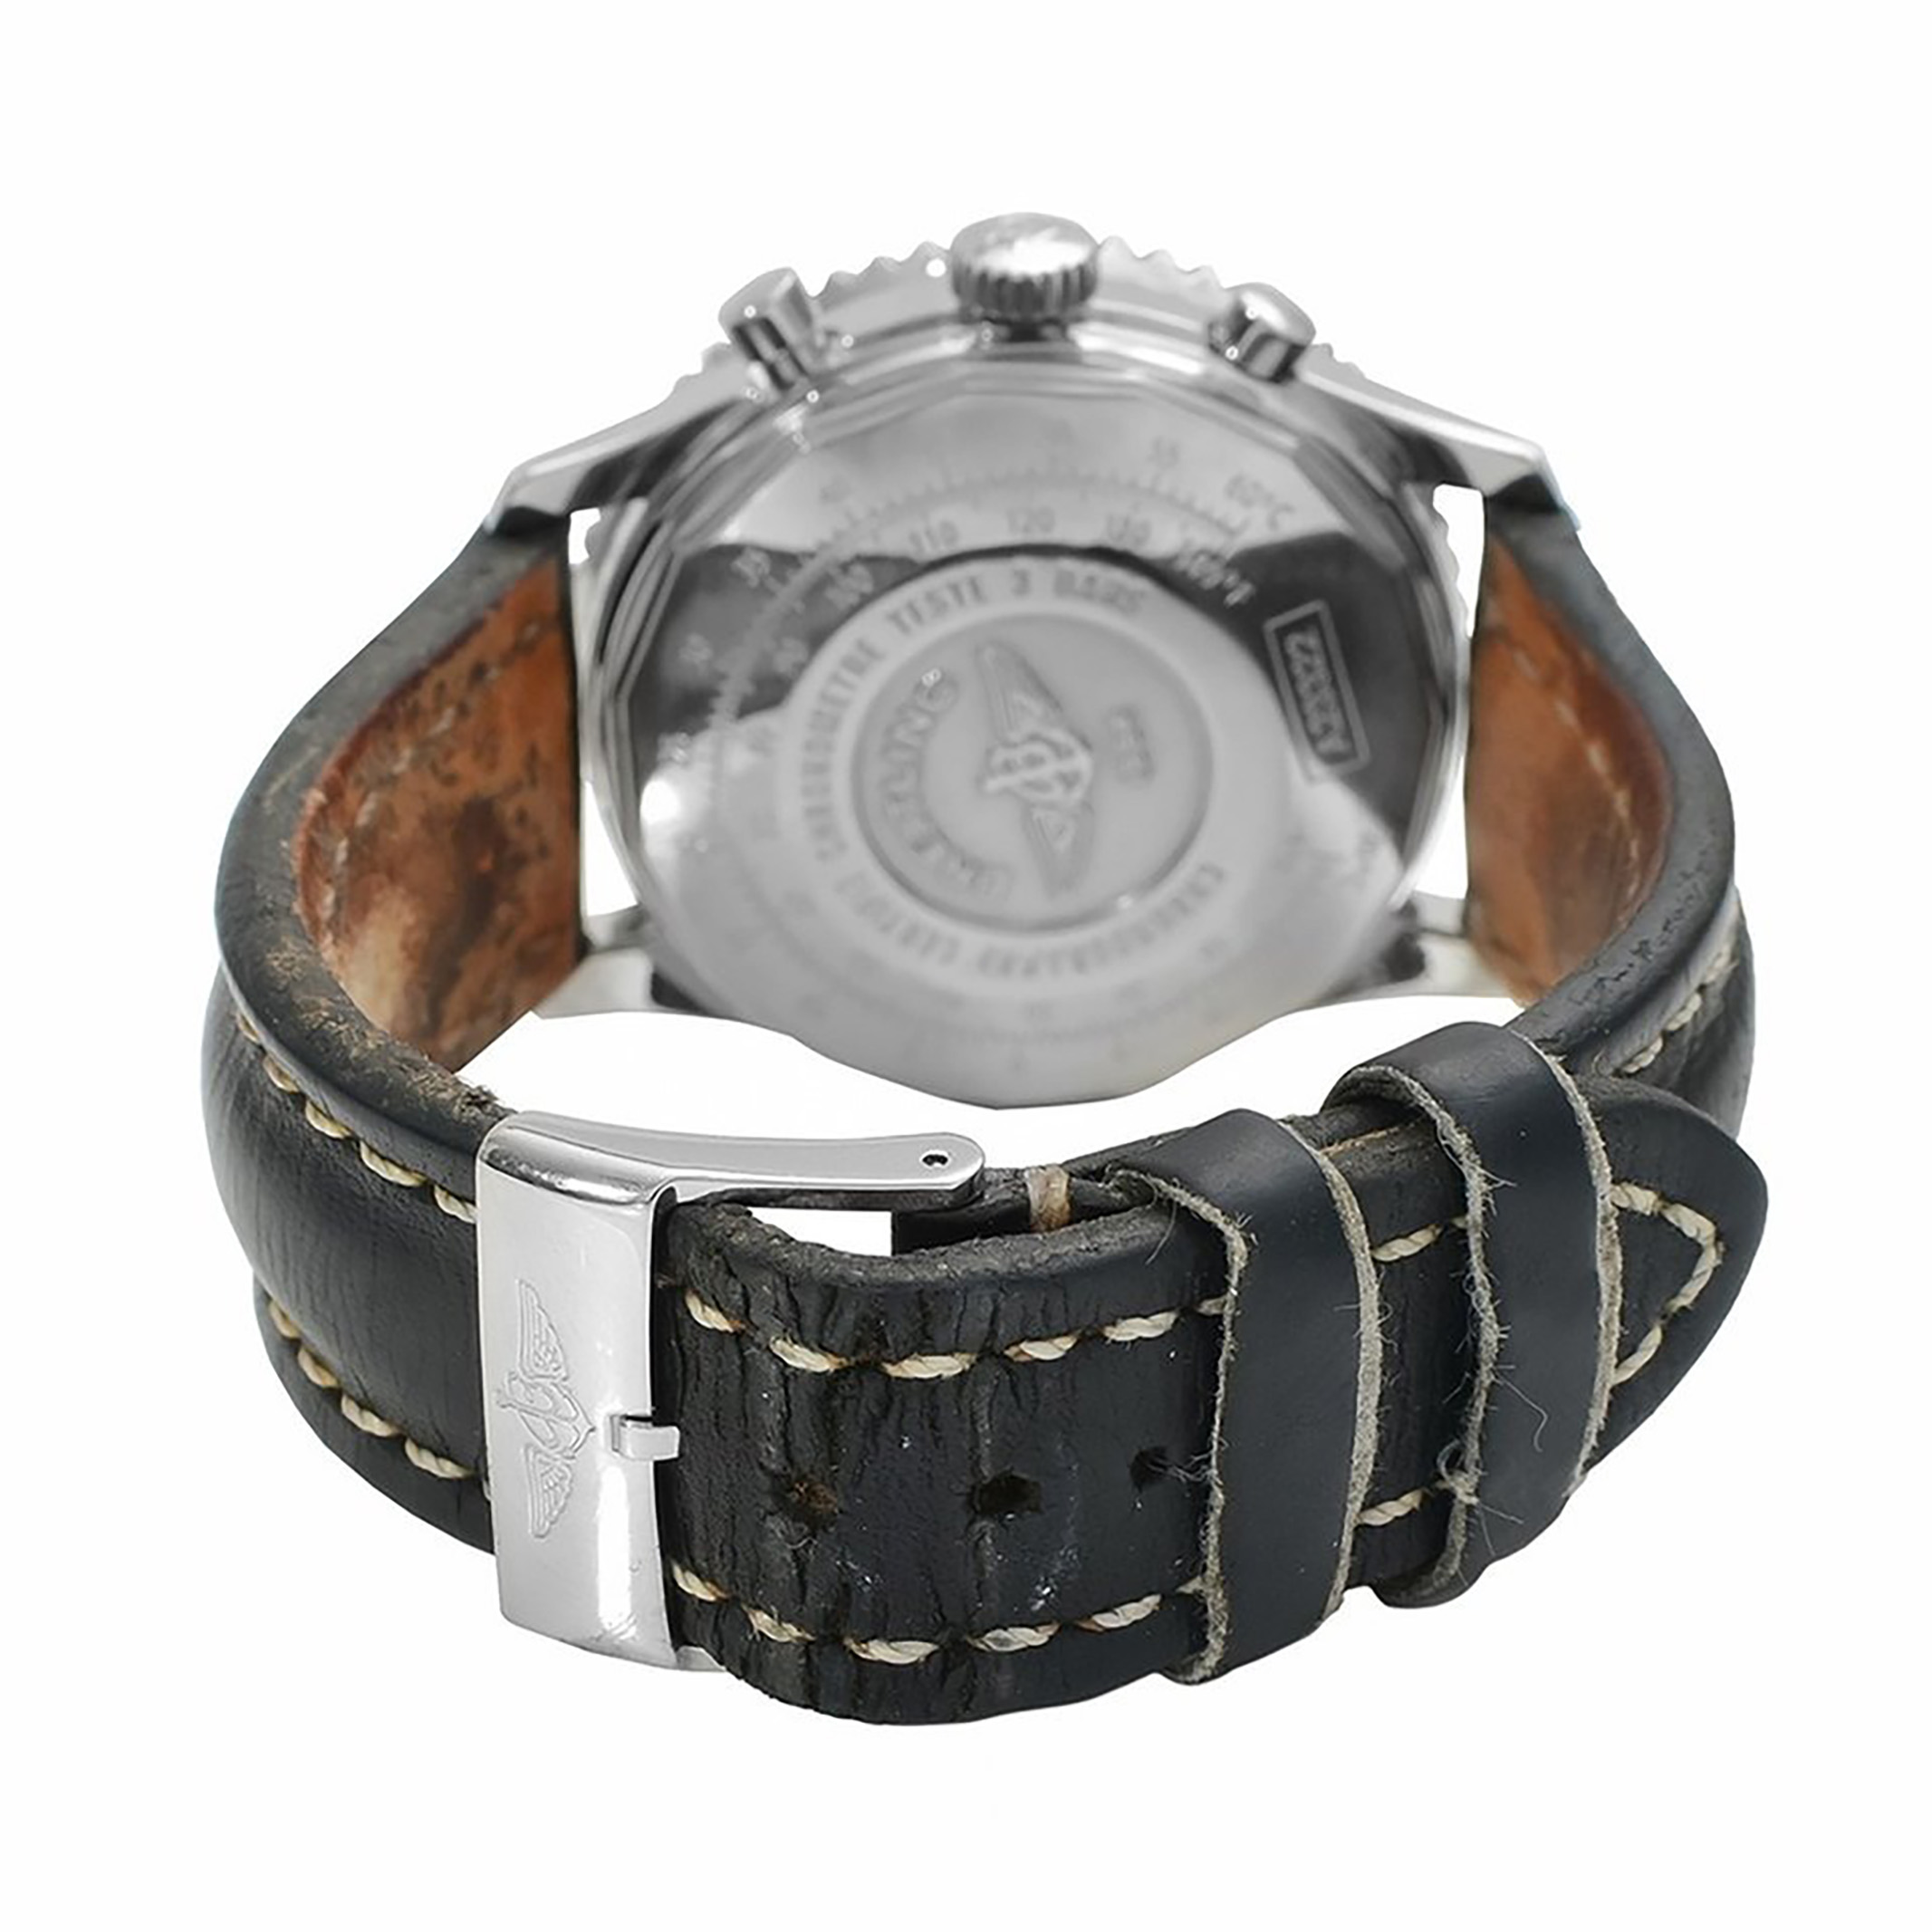 Breitling Navitimer men's wristwatch, year 2017, 44 mm - Image 5 of 5